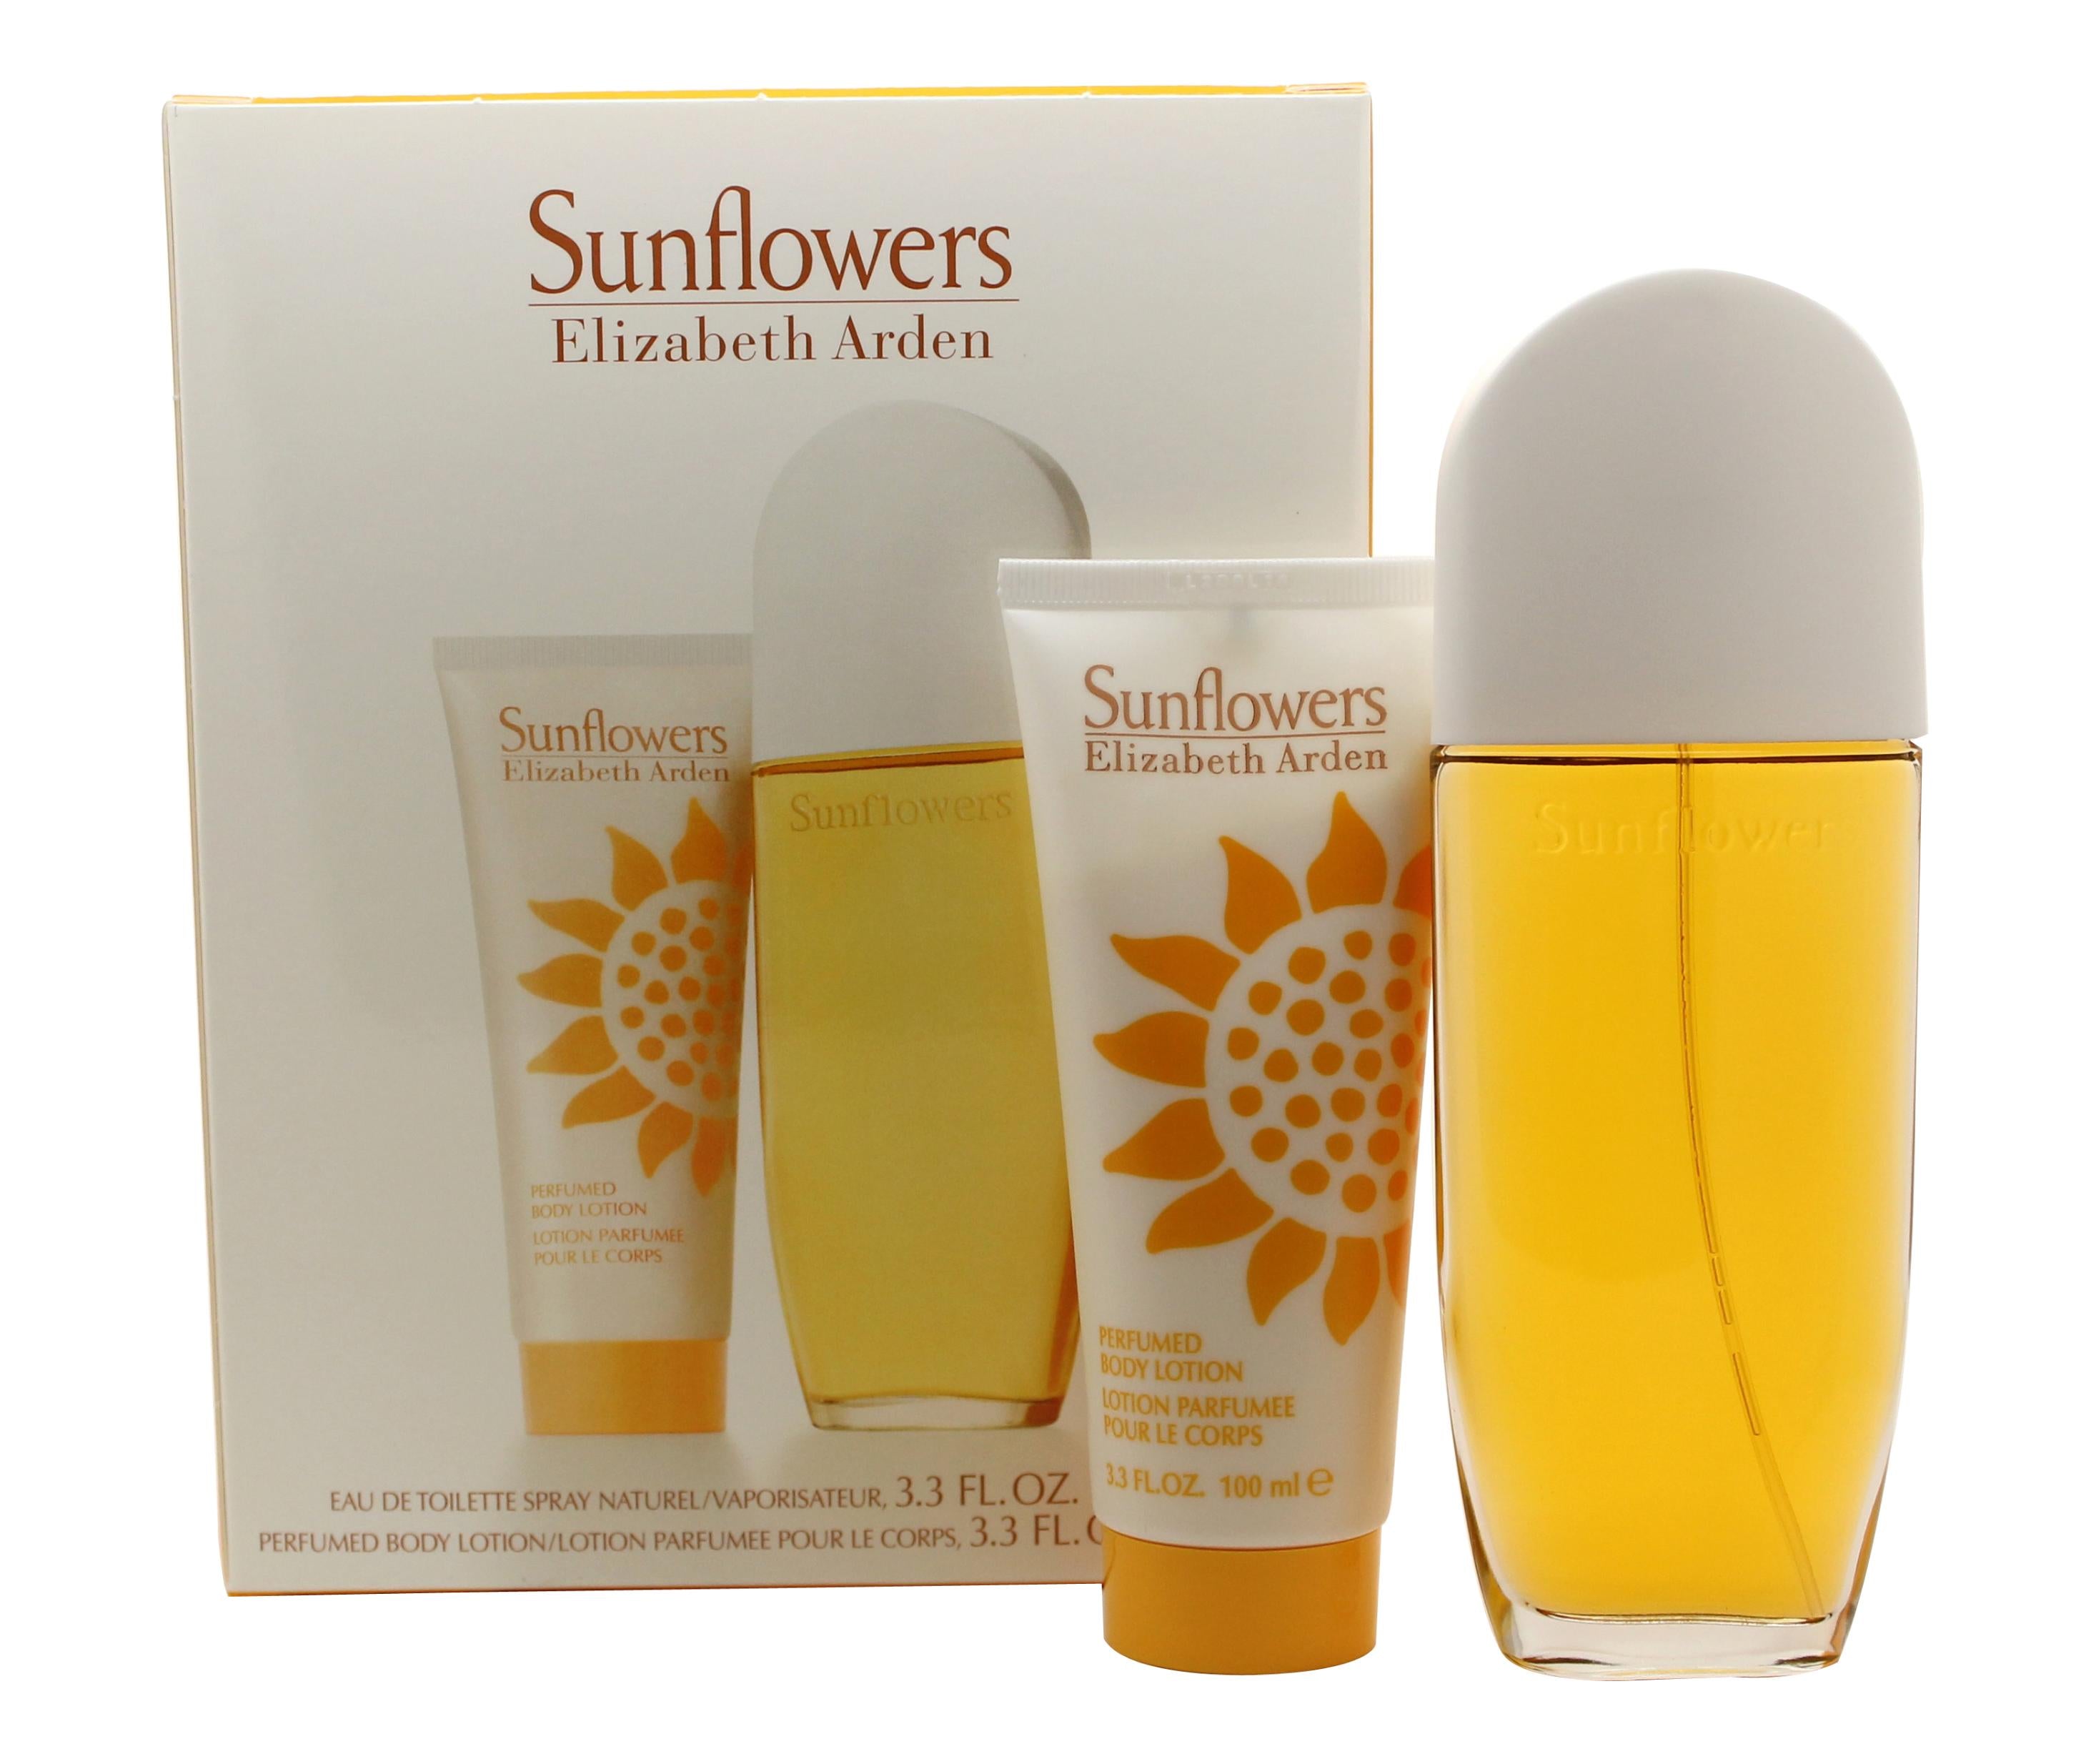 View Elizabeth Arden Sunflowers Gift Set 100ml EDT 100ml Body Lotion information